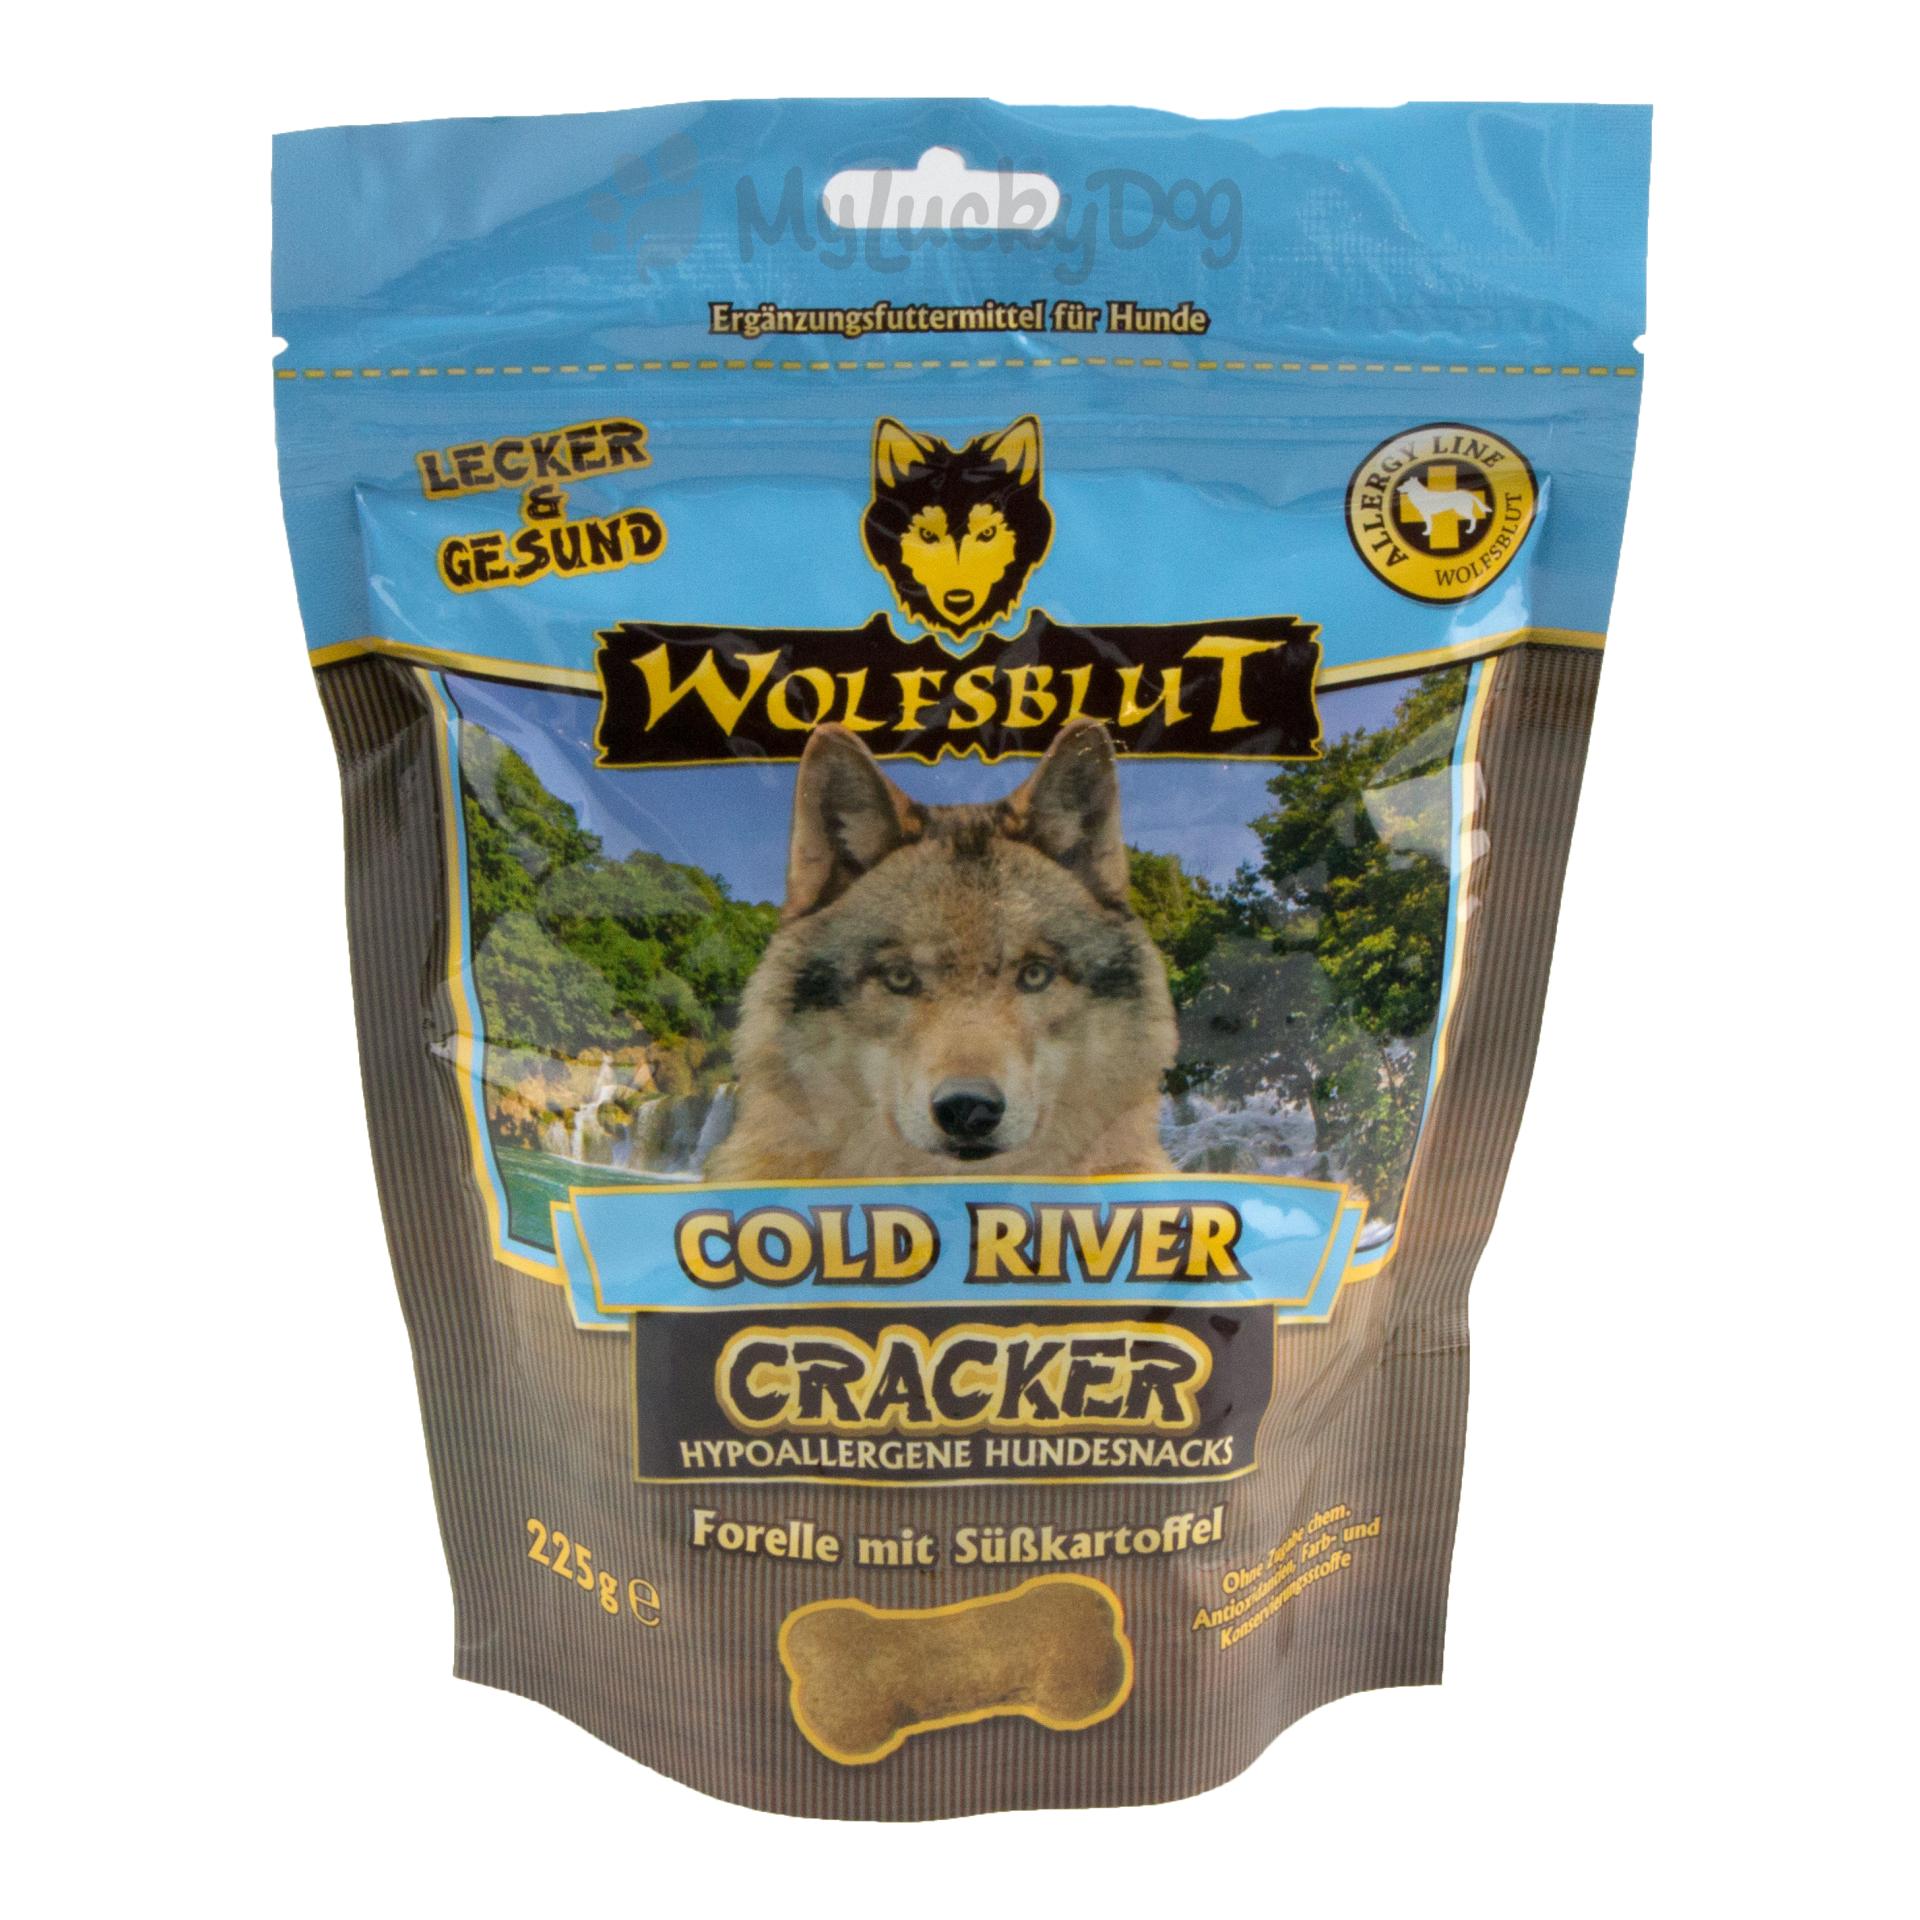 Image of Wolfsblut Cracker Hundesnacks Cold River mit Forelle 225 g bei Hauptner.ch